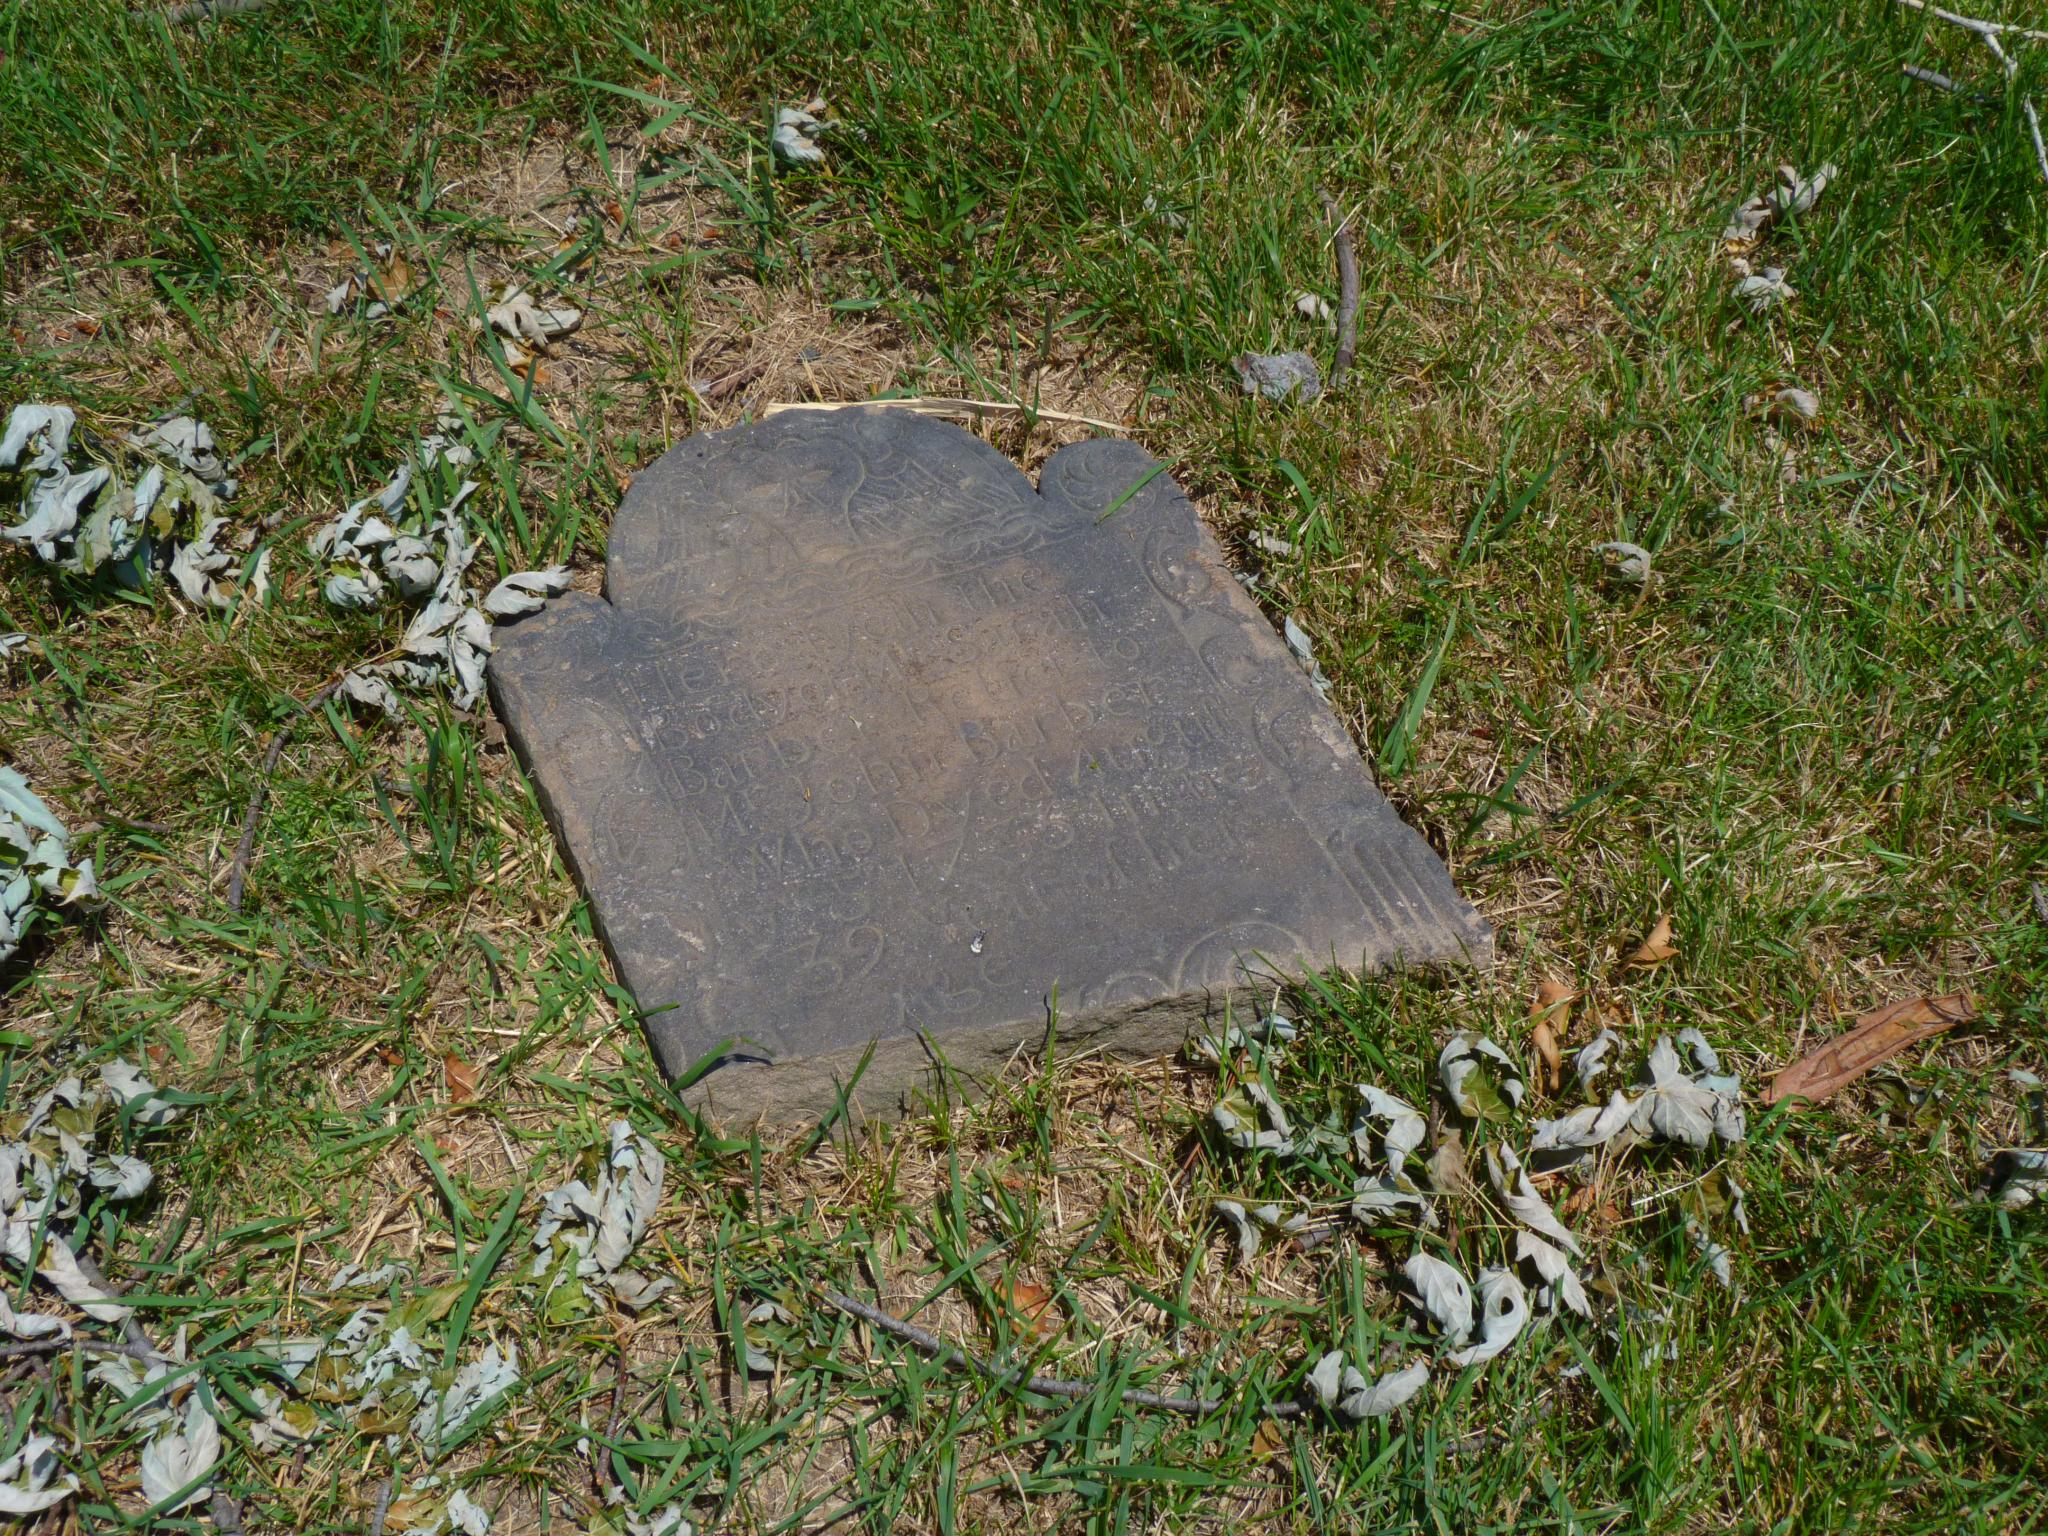 a small stone sitting in a grassy area